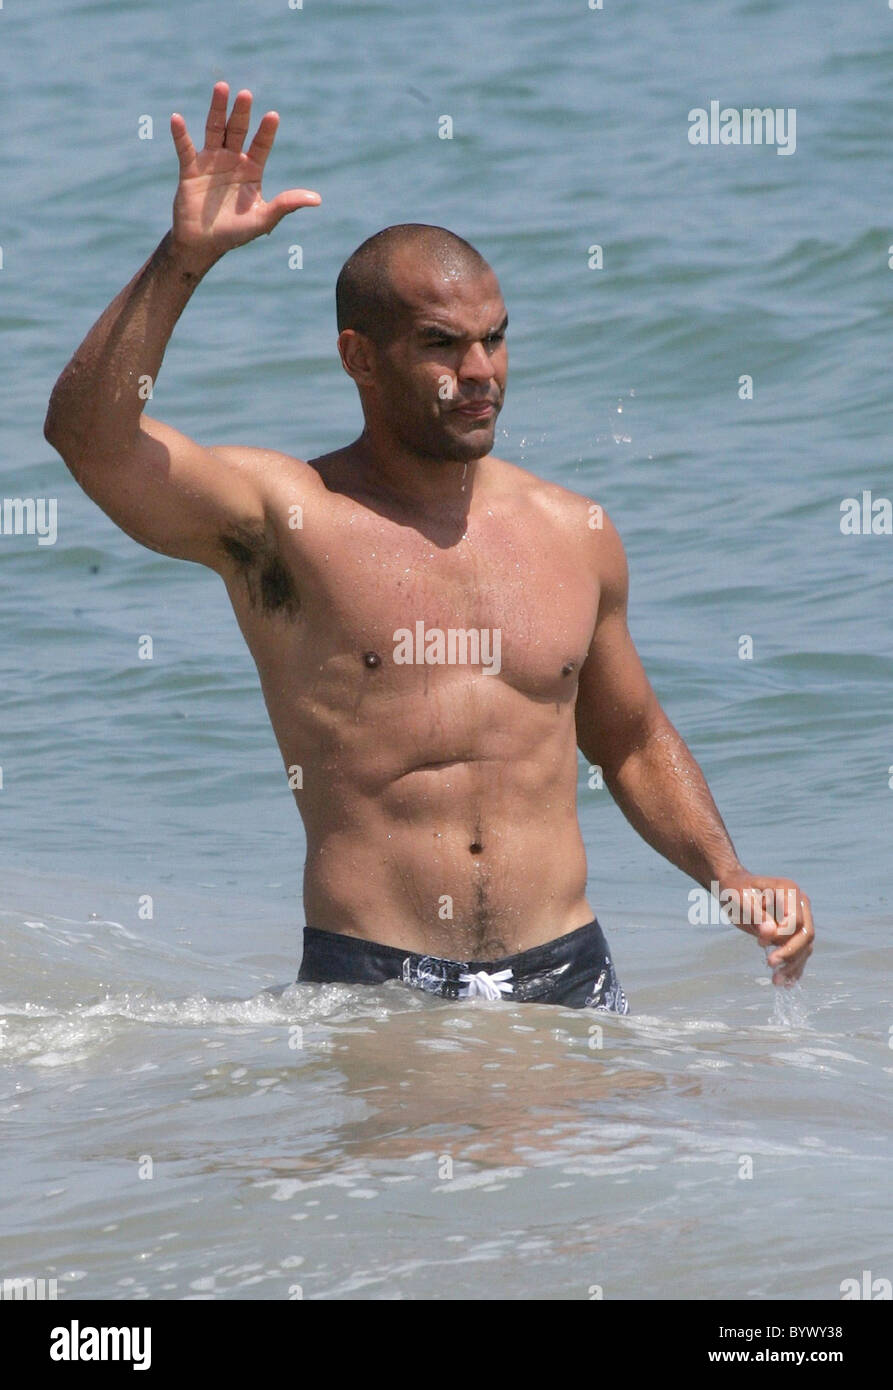 Amaury Nolasco who plays Fernando Sucre in 'Prison Break' takes some R&R and plays ball on Malibu Beach Malibu, California - Stock Photo